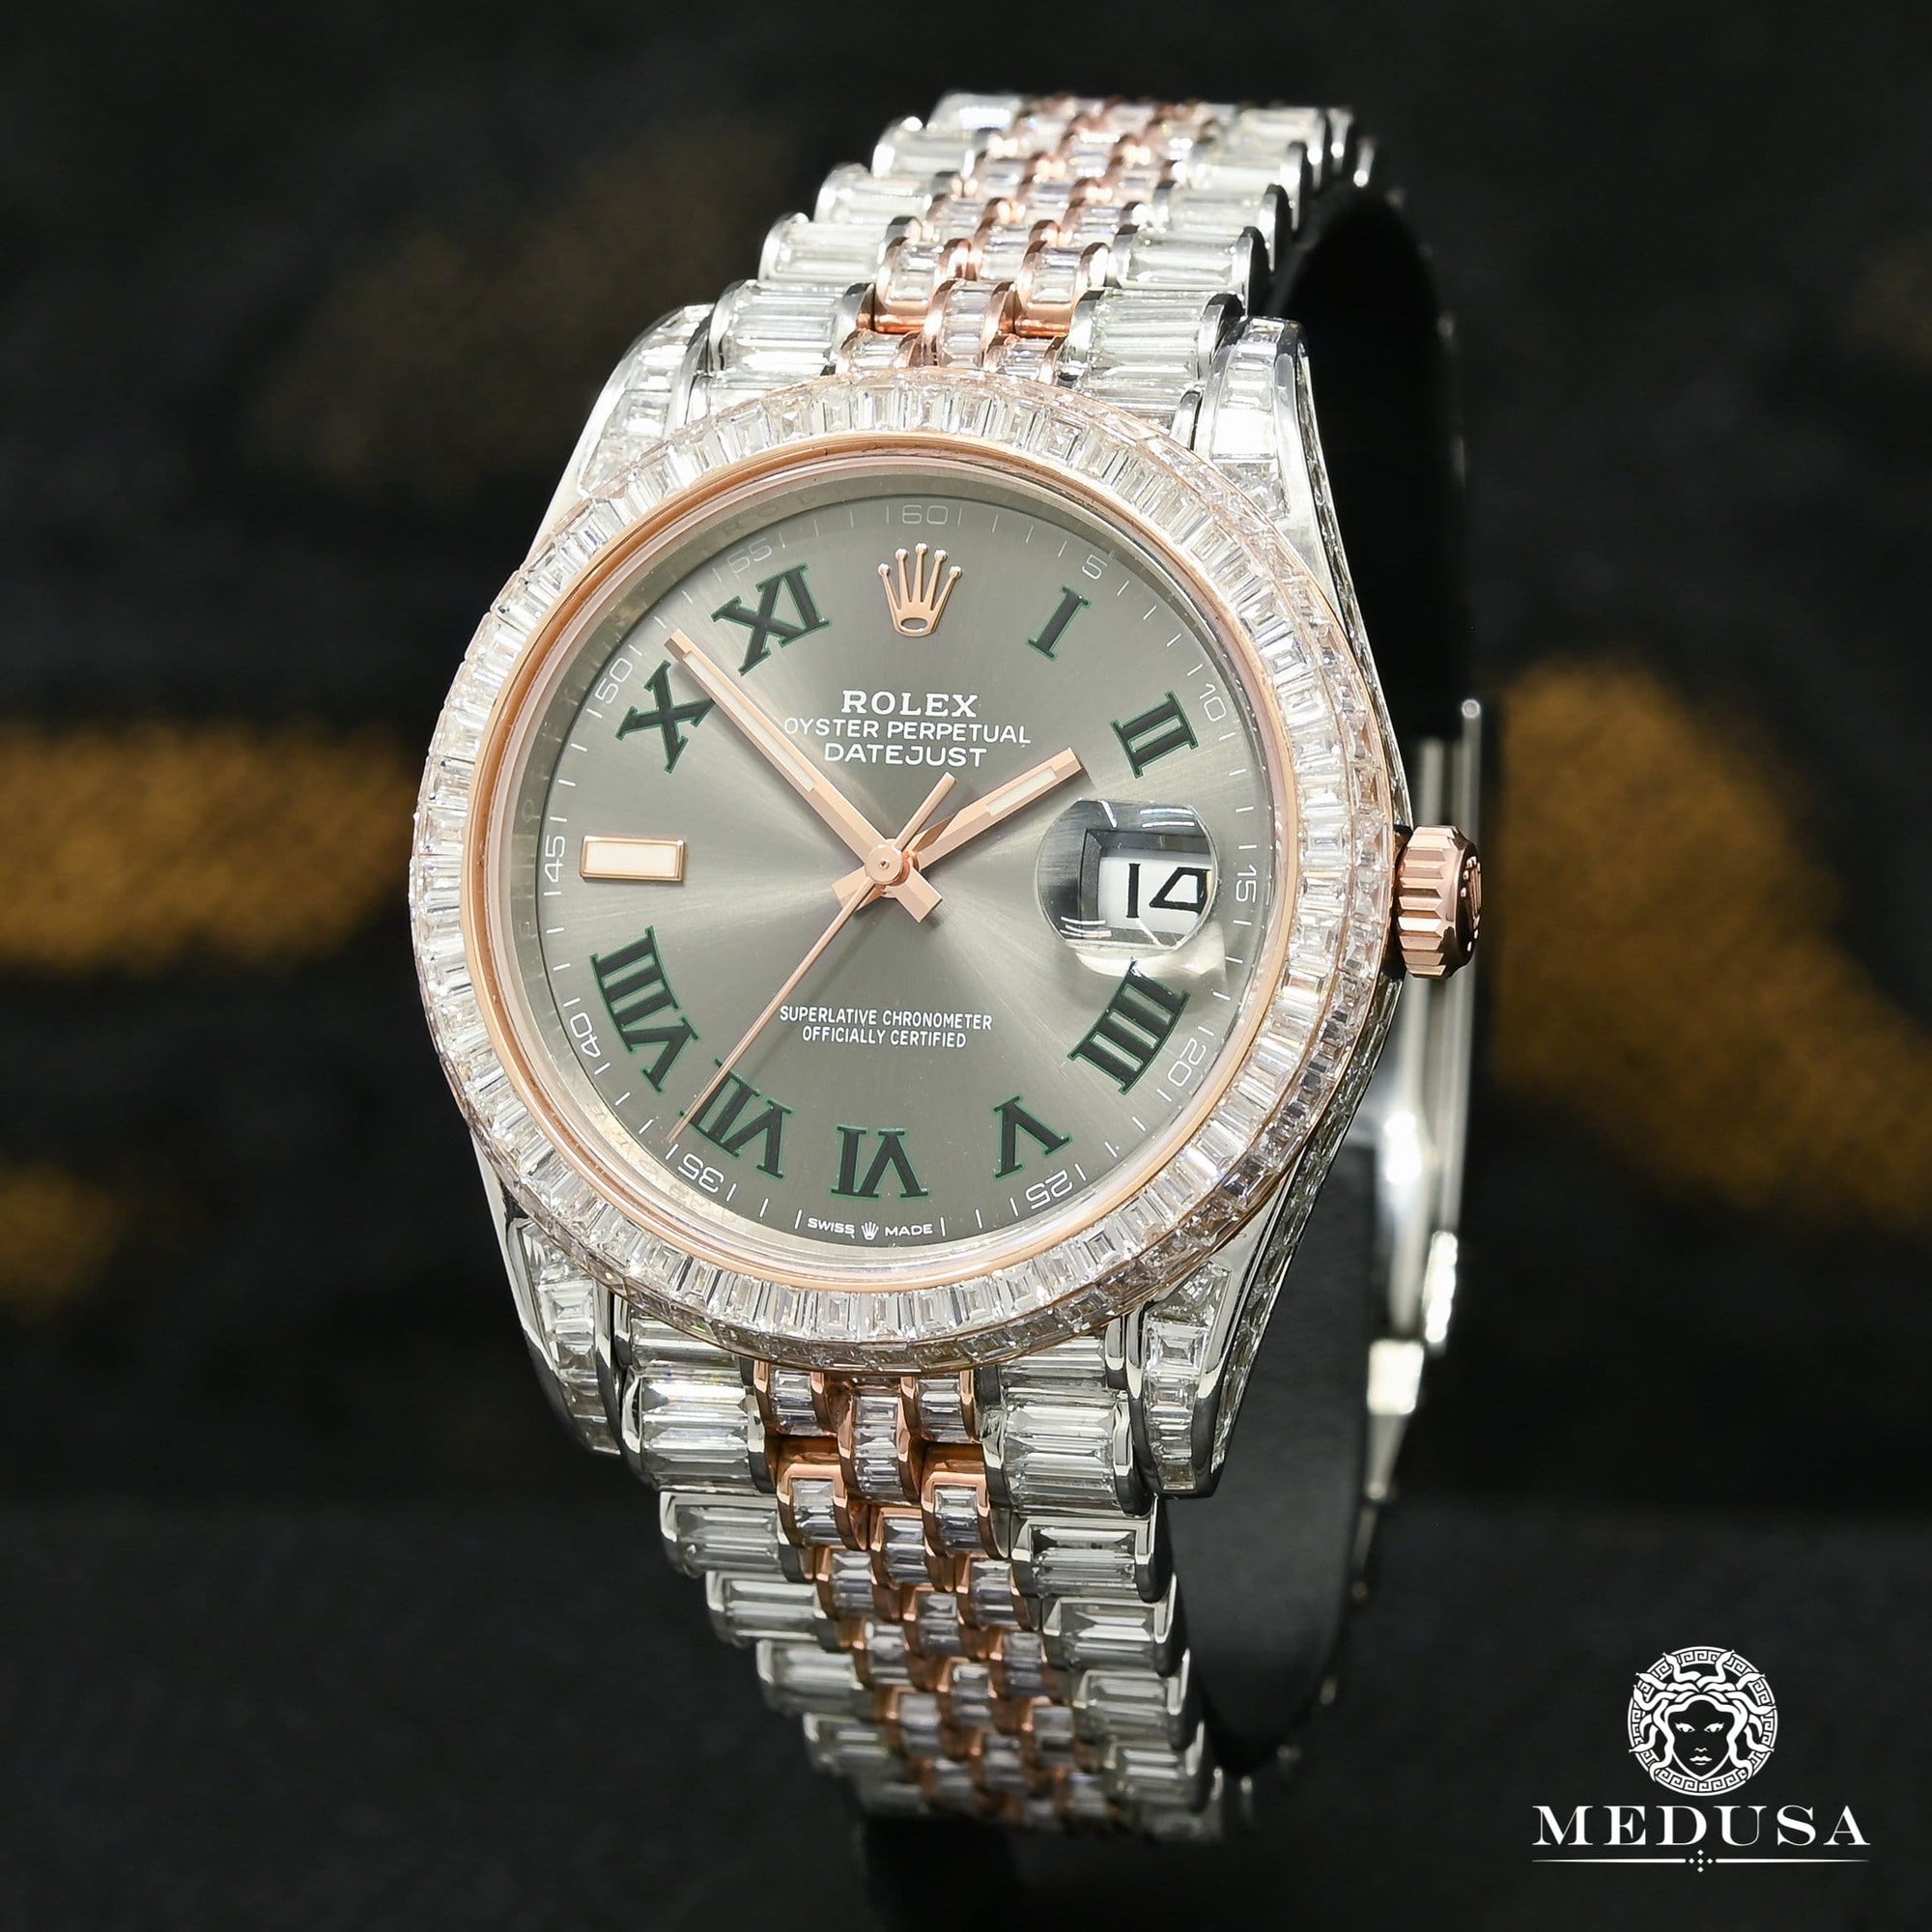 Rolex watch | Rolex Datejust Men's Watch 41mm - Wimbledon Everose Emerald Cut Rose Gold 2 Tones